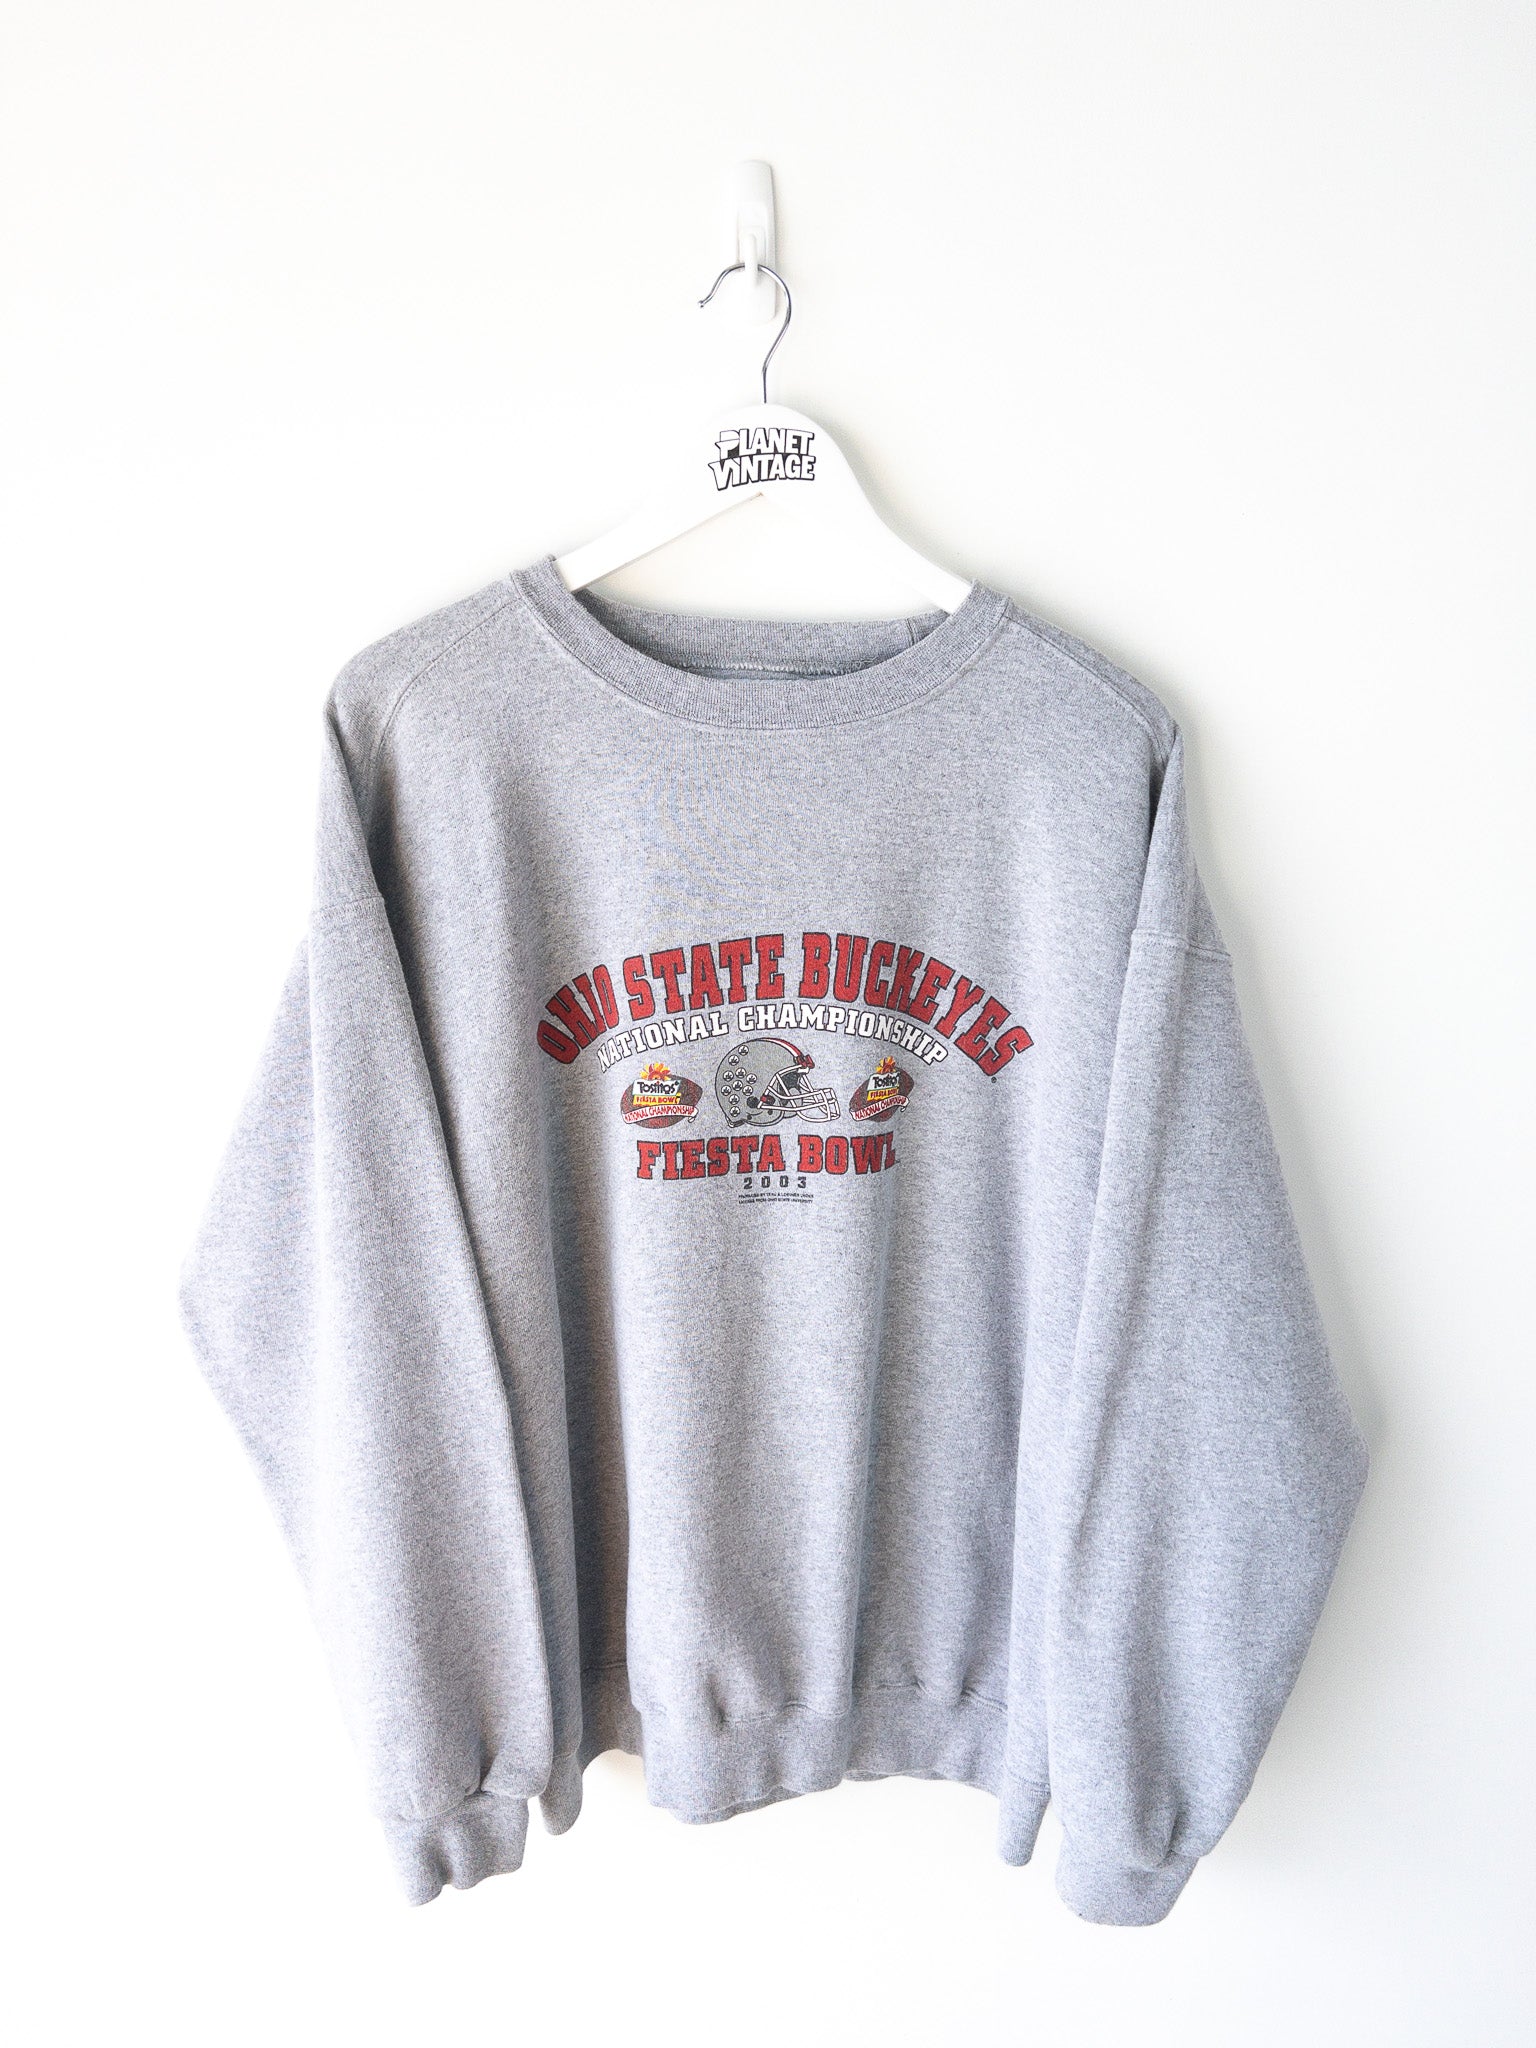 Vintage Ohio State Buckeyes Championship Sweatshirt (XL)